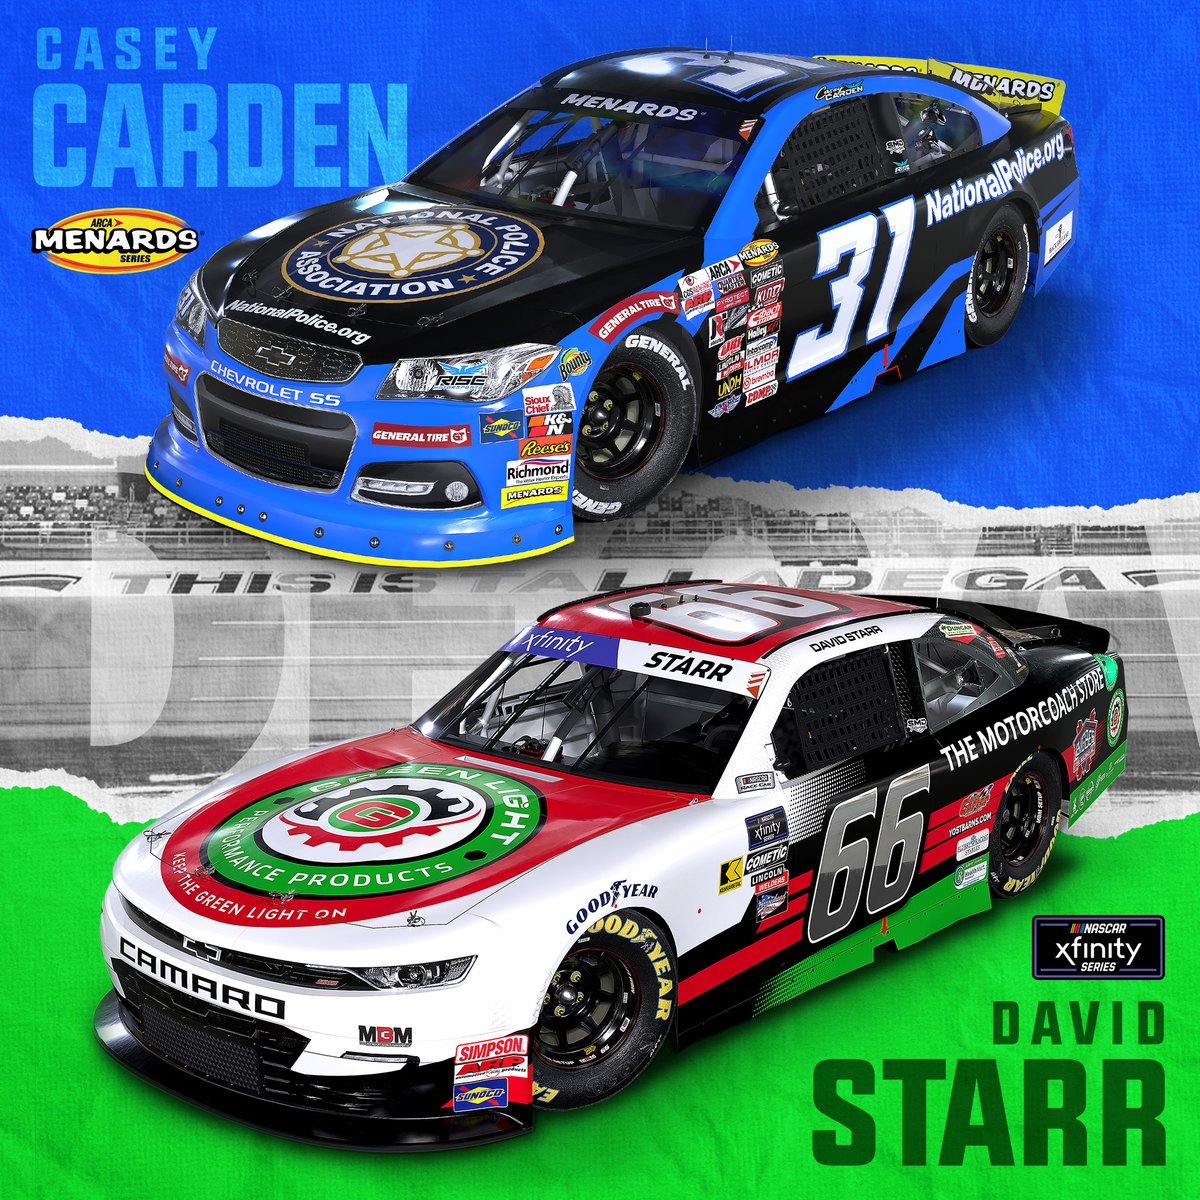 It's race weekend @TALLADEGA ! Check out the SMD paint schemes heading to Alabama. 🏁 @ARCA_Racing #31 Casey Carden - @NatPoliceAssoc - @risemotorsports @NASCAR_Xfinity #66 @starr_racing - @GenerxGenerator - @MBMMotorsports #NASCAR #PaintSchemeDesign #DegaBaby